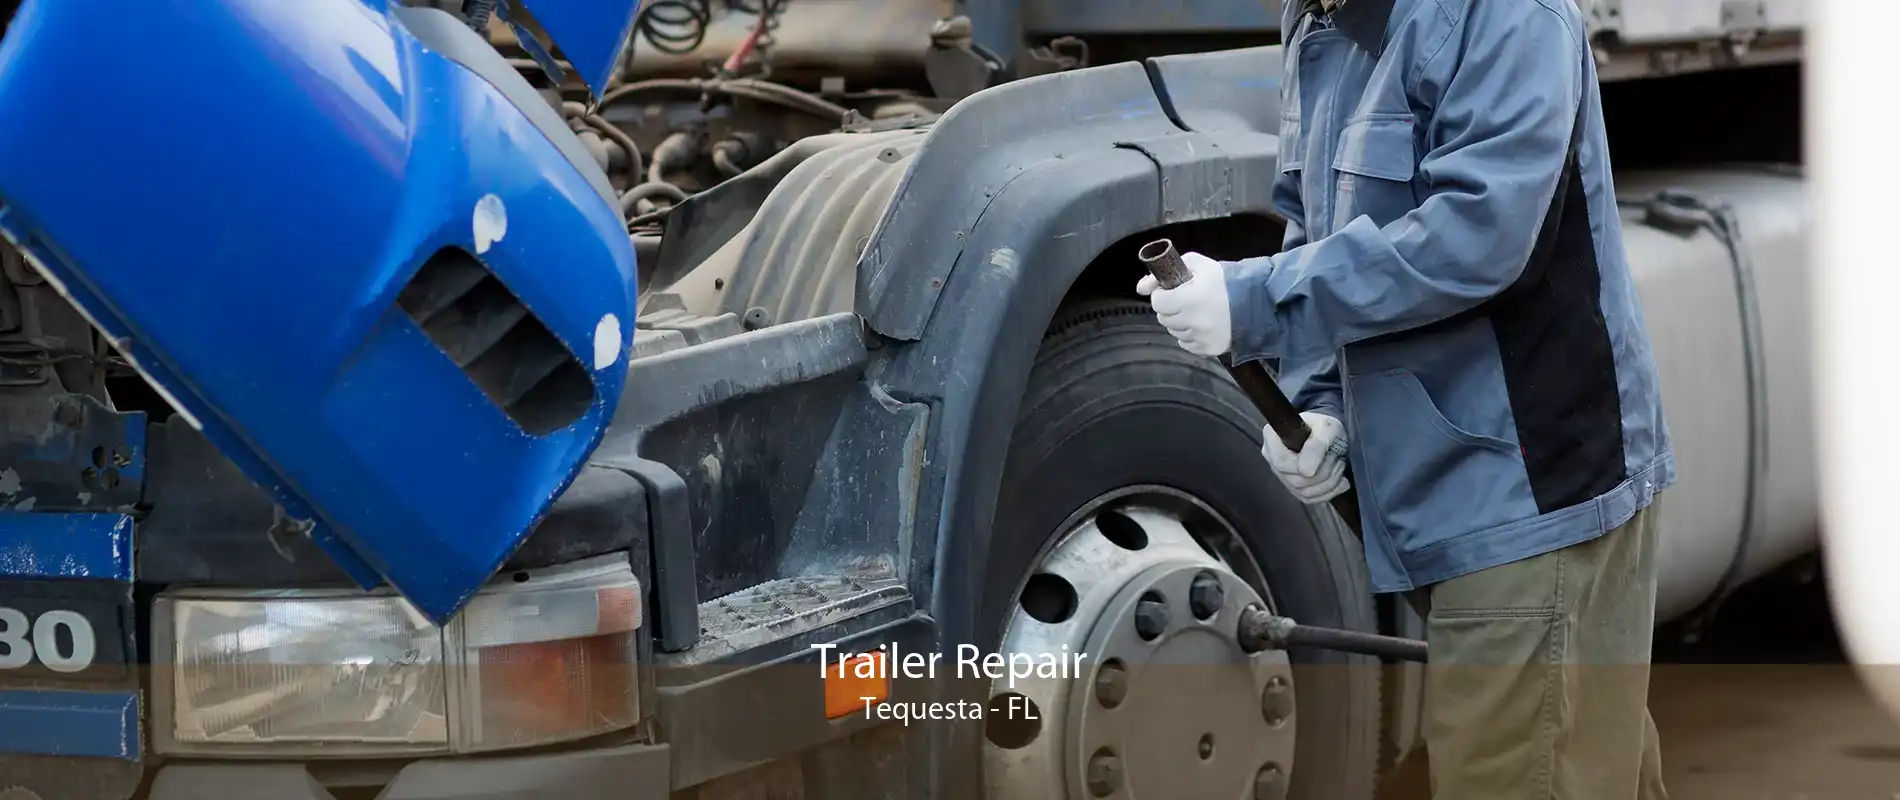 Trailer Repair Tequesta - FL